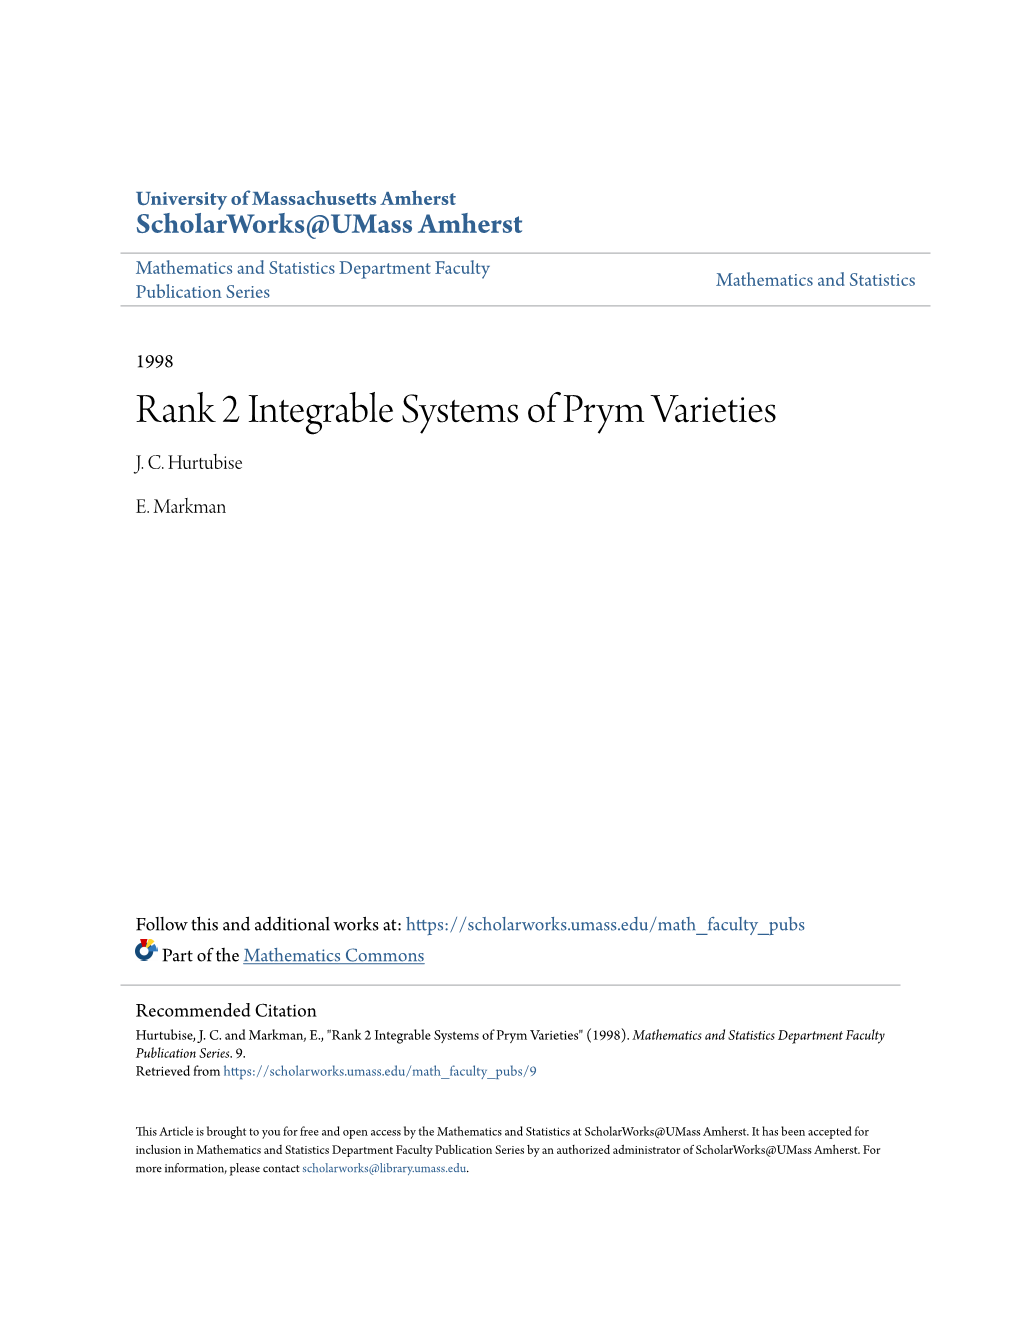 Rank 2 Integrable Systems of Prym Varieties J